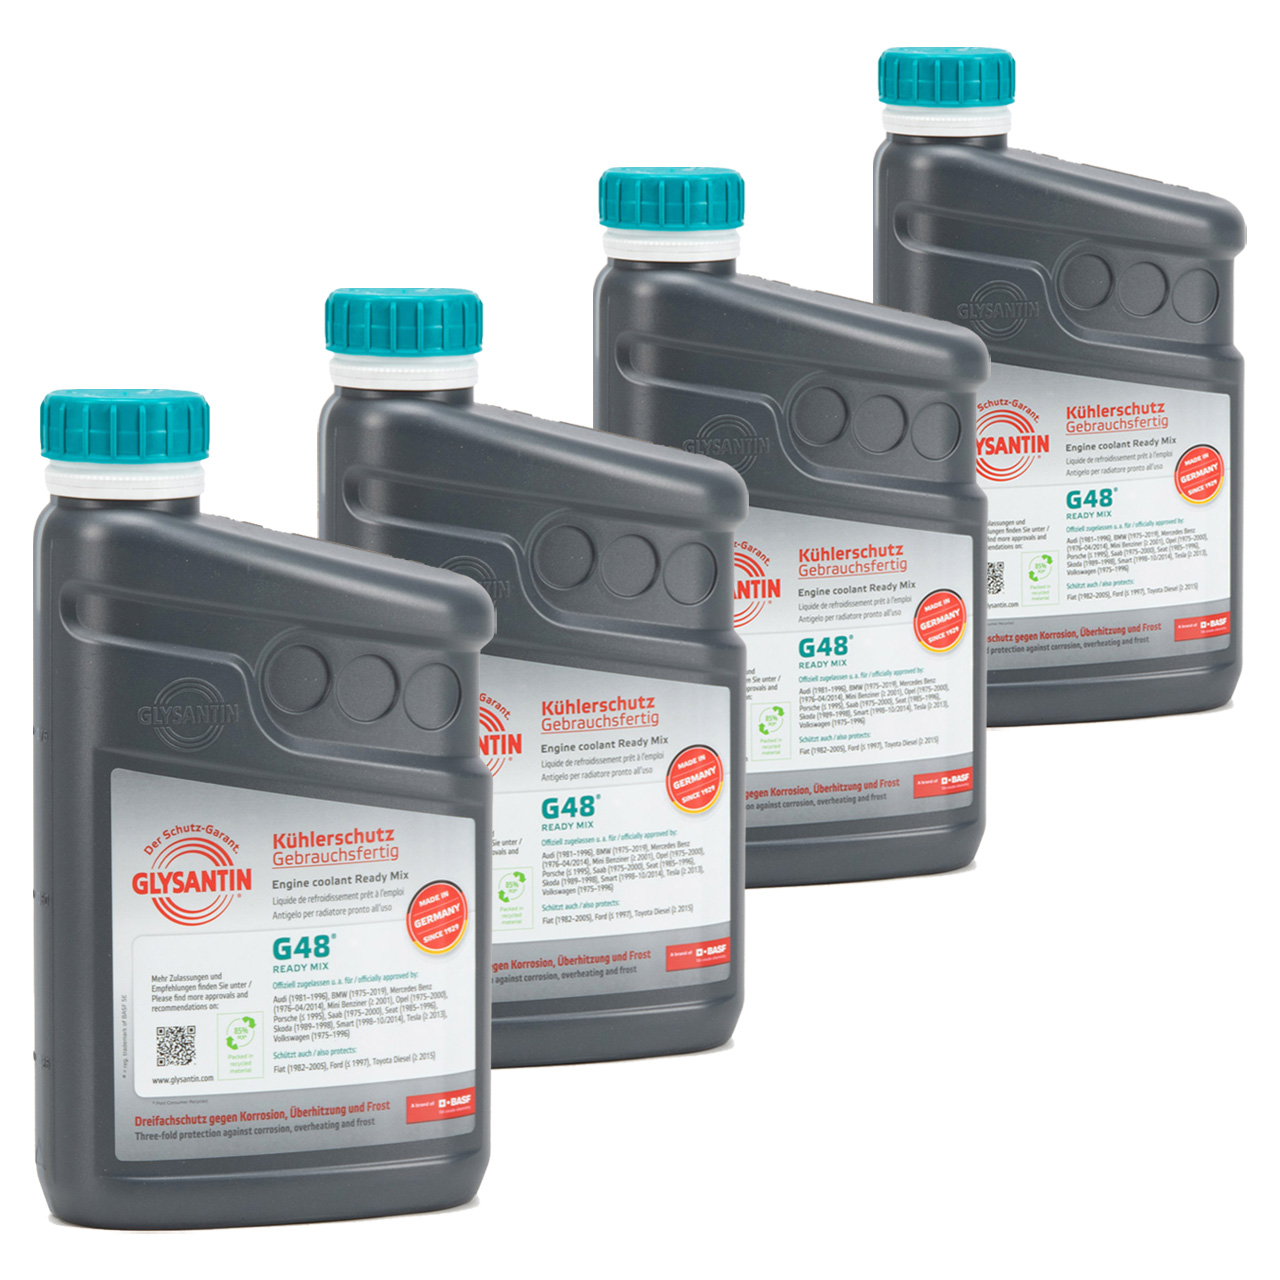 4L 4 Liter BASF GLYSANTIN Frostschutz Kühlerfrostschutz Ready Mix